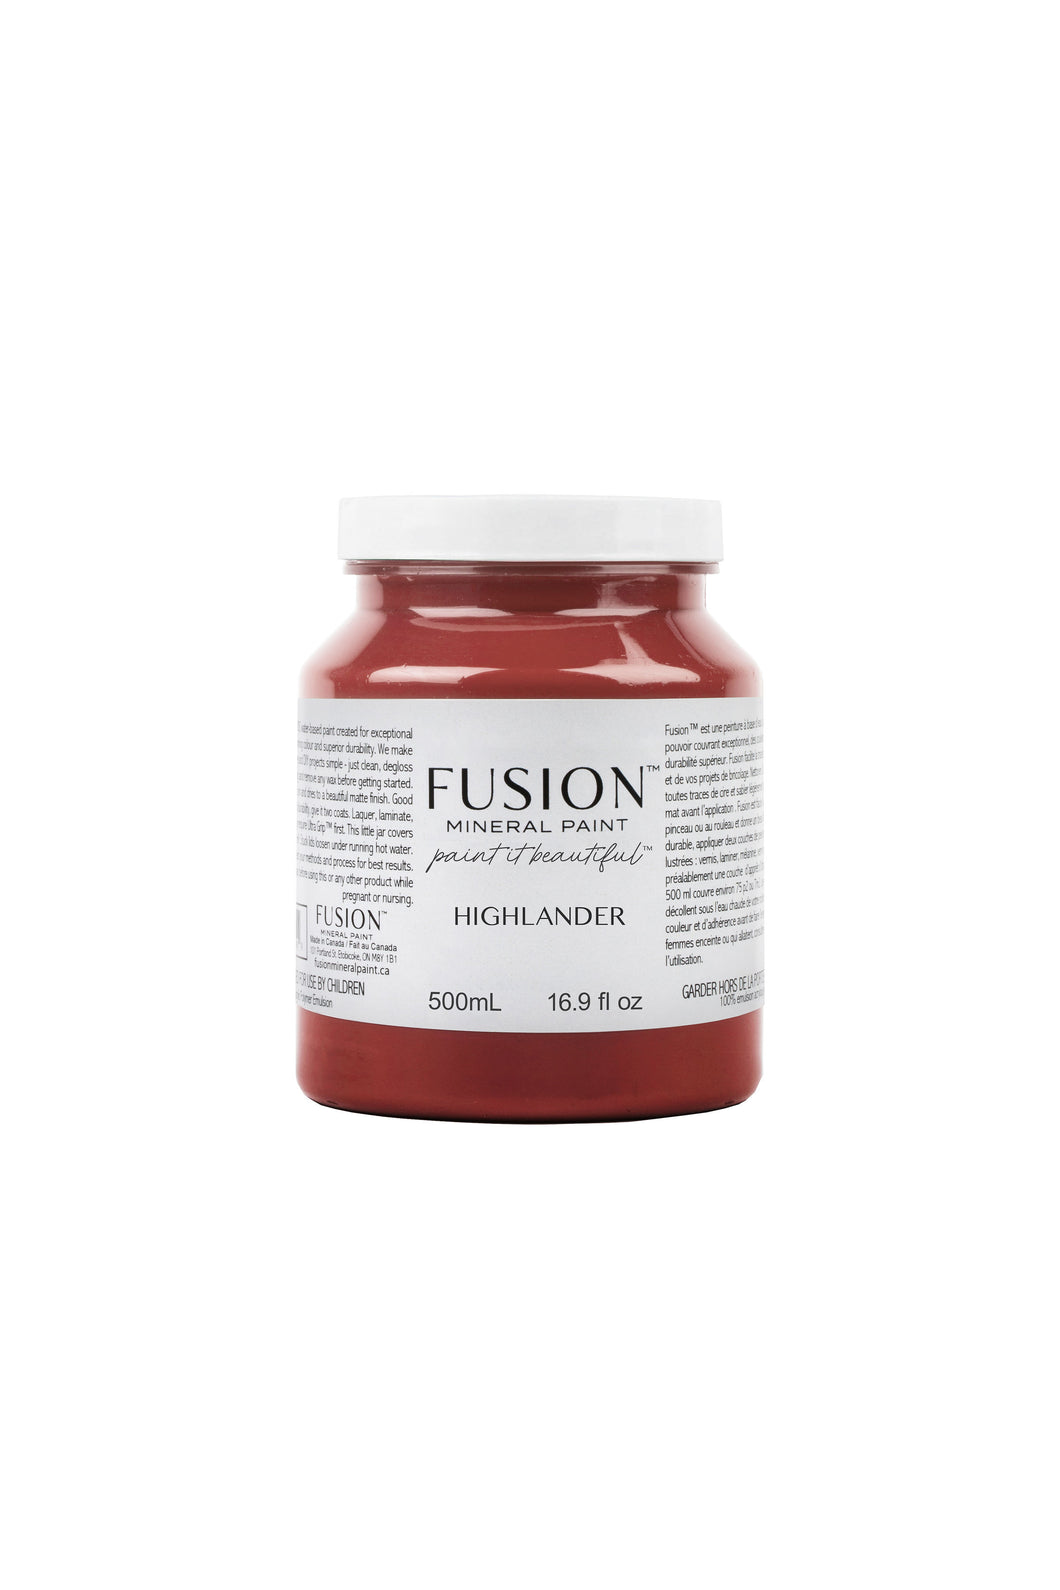 Fusion Mineral Paint - Highlander 500 ml Jar